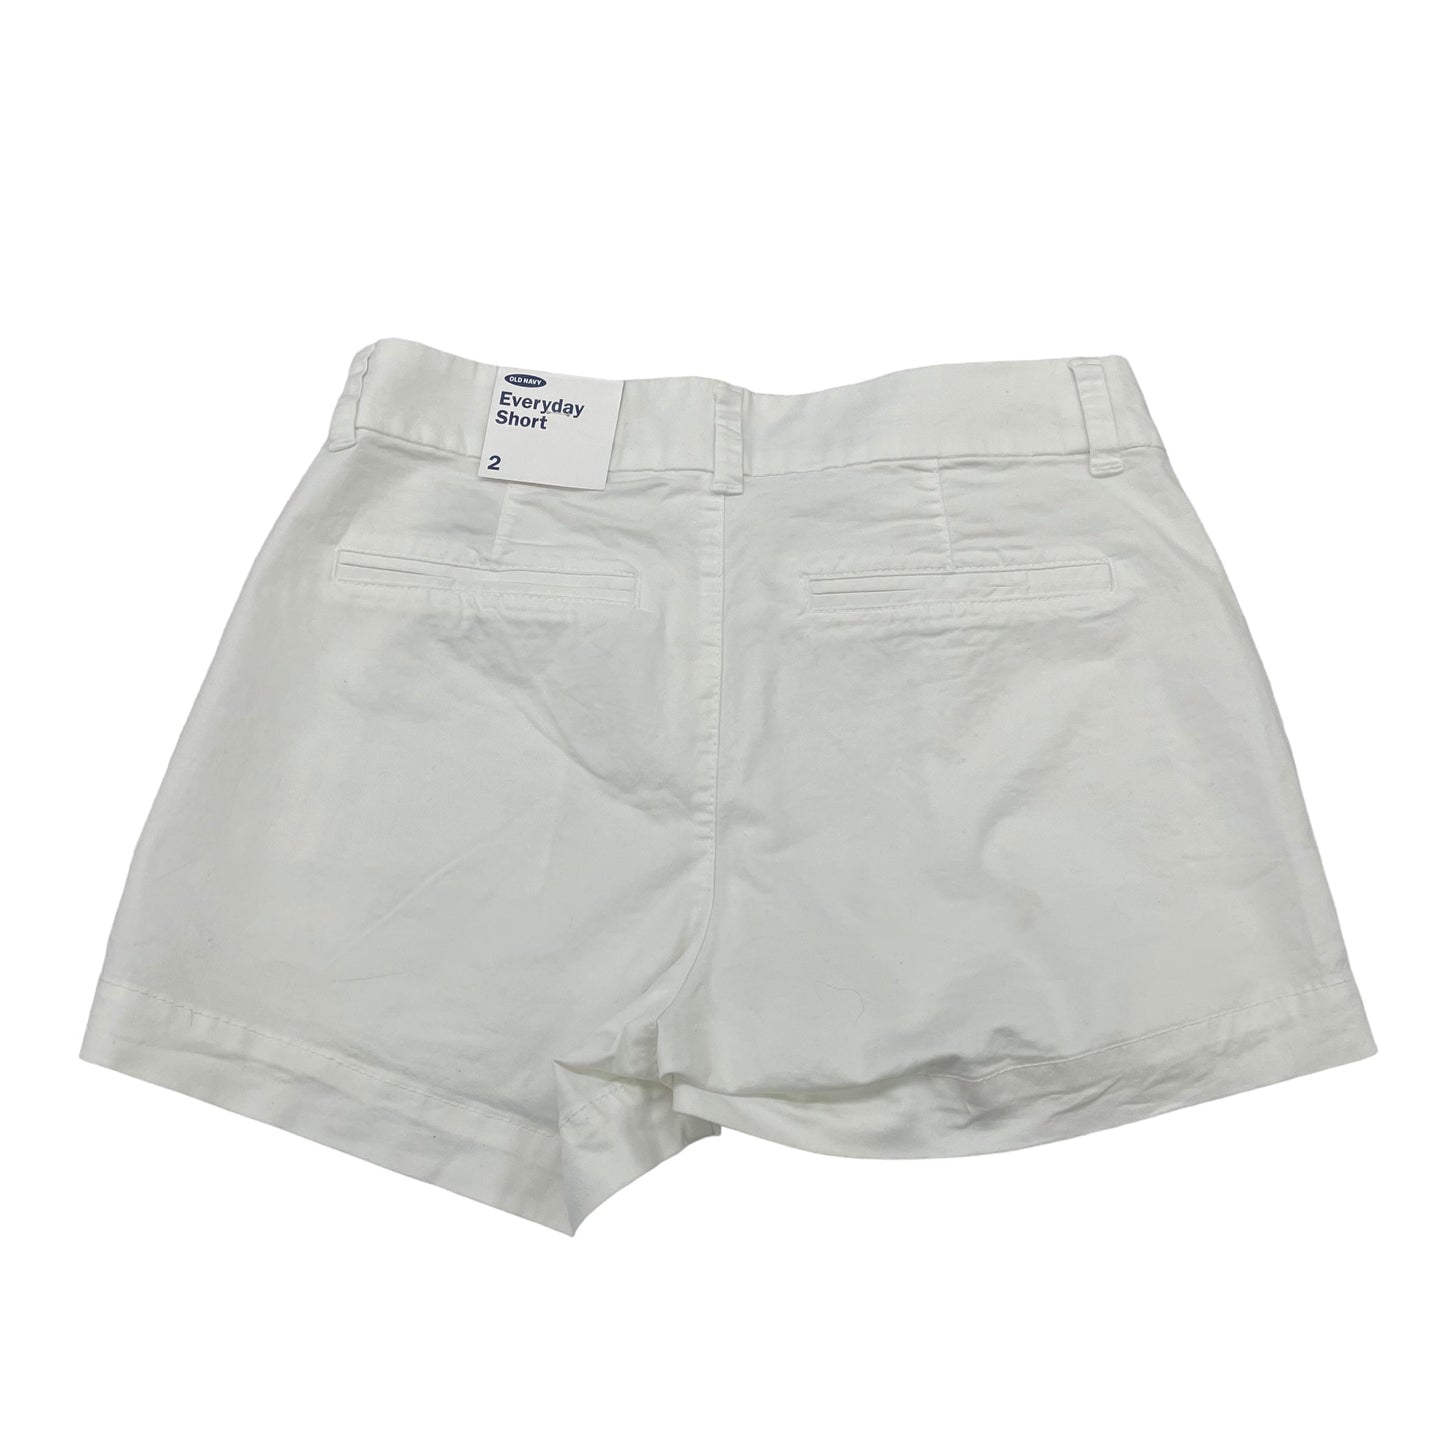 Cream Shorts Old Navy, Size 2